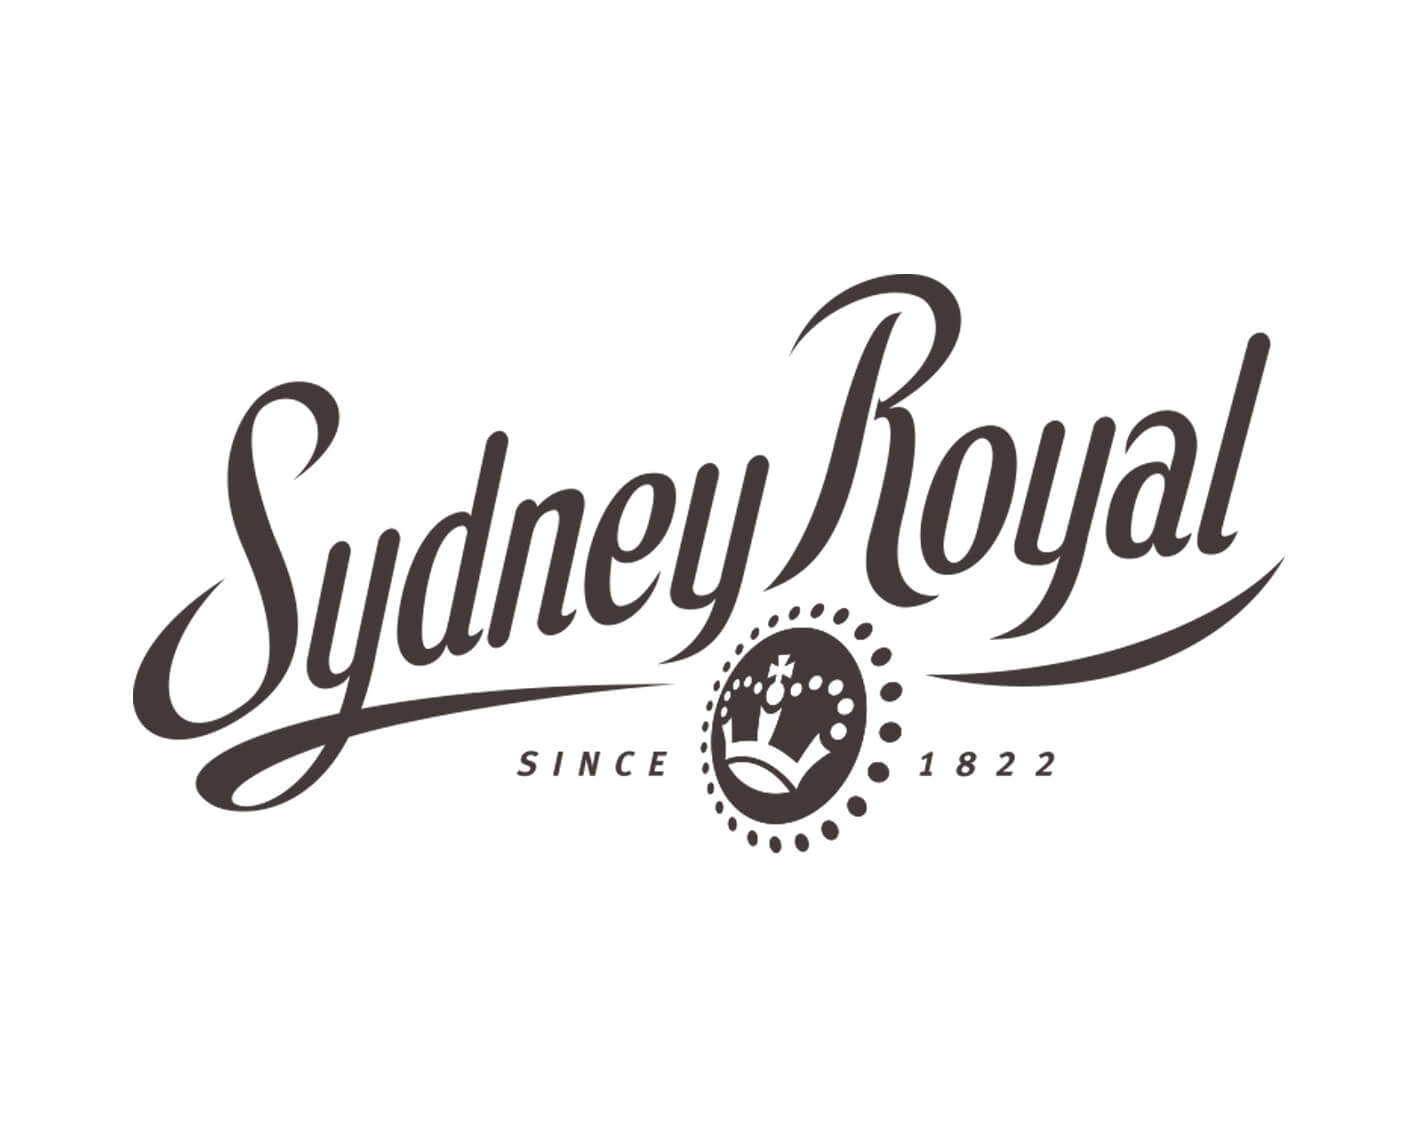 Sydney Royal